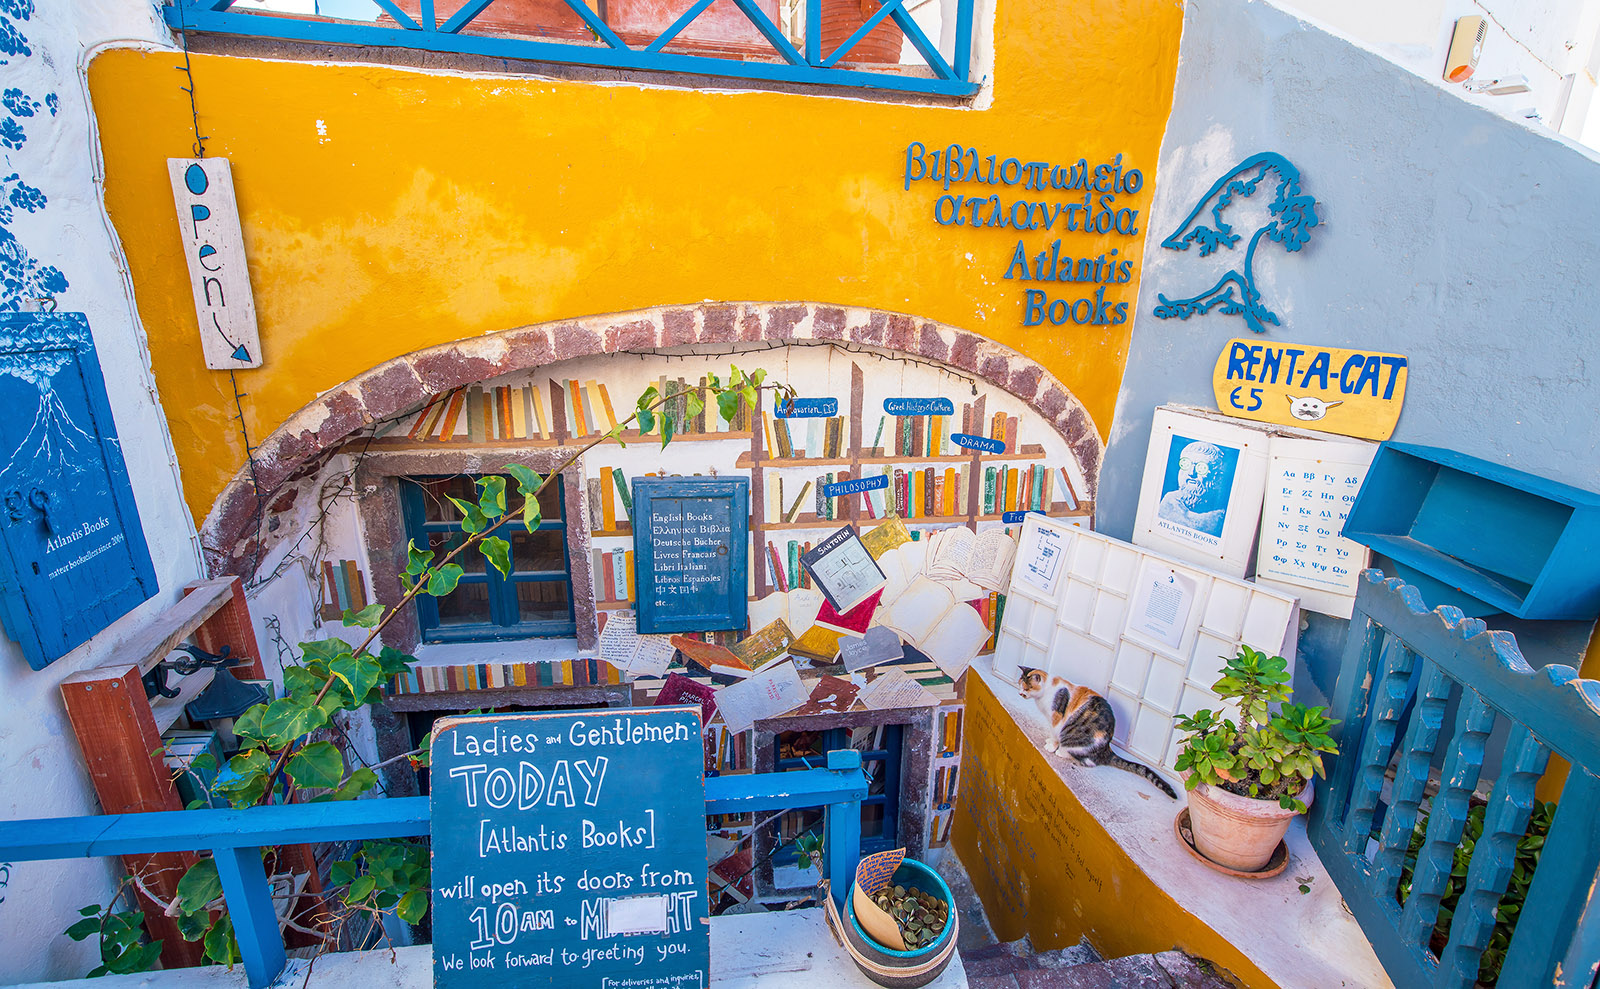 Add Atlantis Books in Santorini, Greece to Your Must-Visit Bookshop List